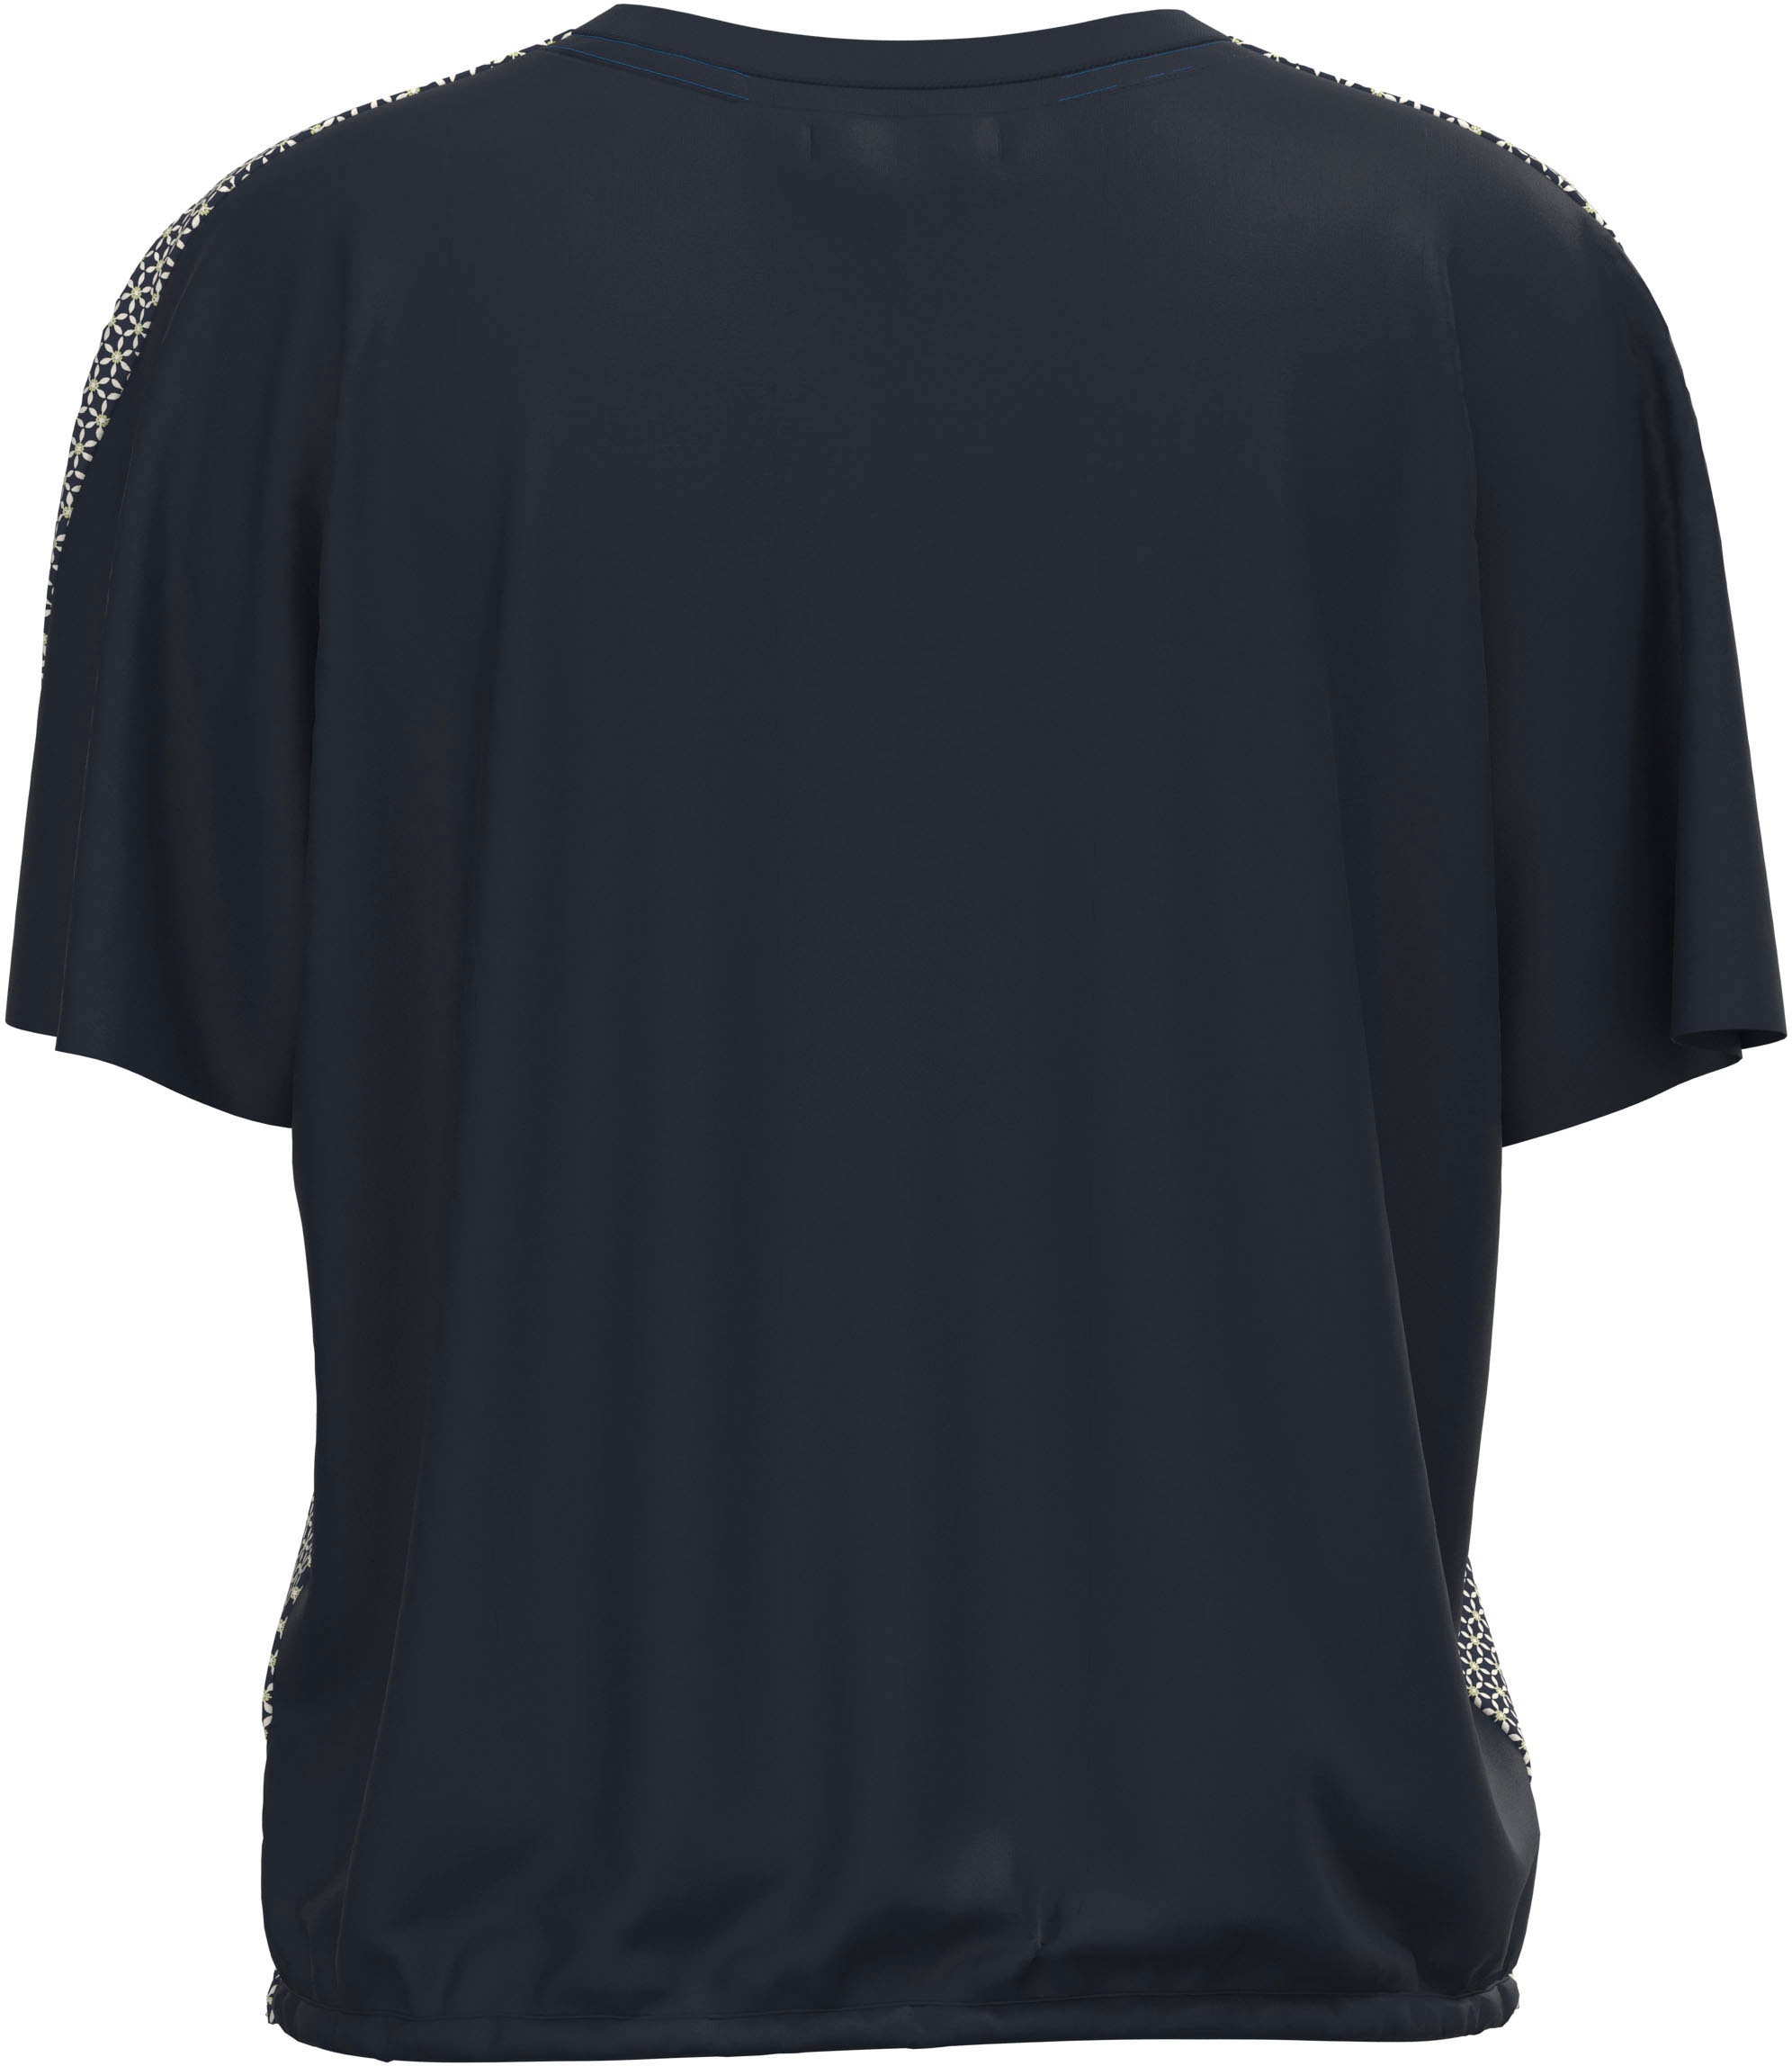 RAW to«, block G-Star »T-Shirt Lash tank T-Shirt kaufen vorne Logo mti color Grafikdruck